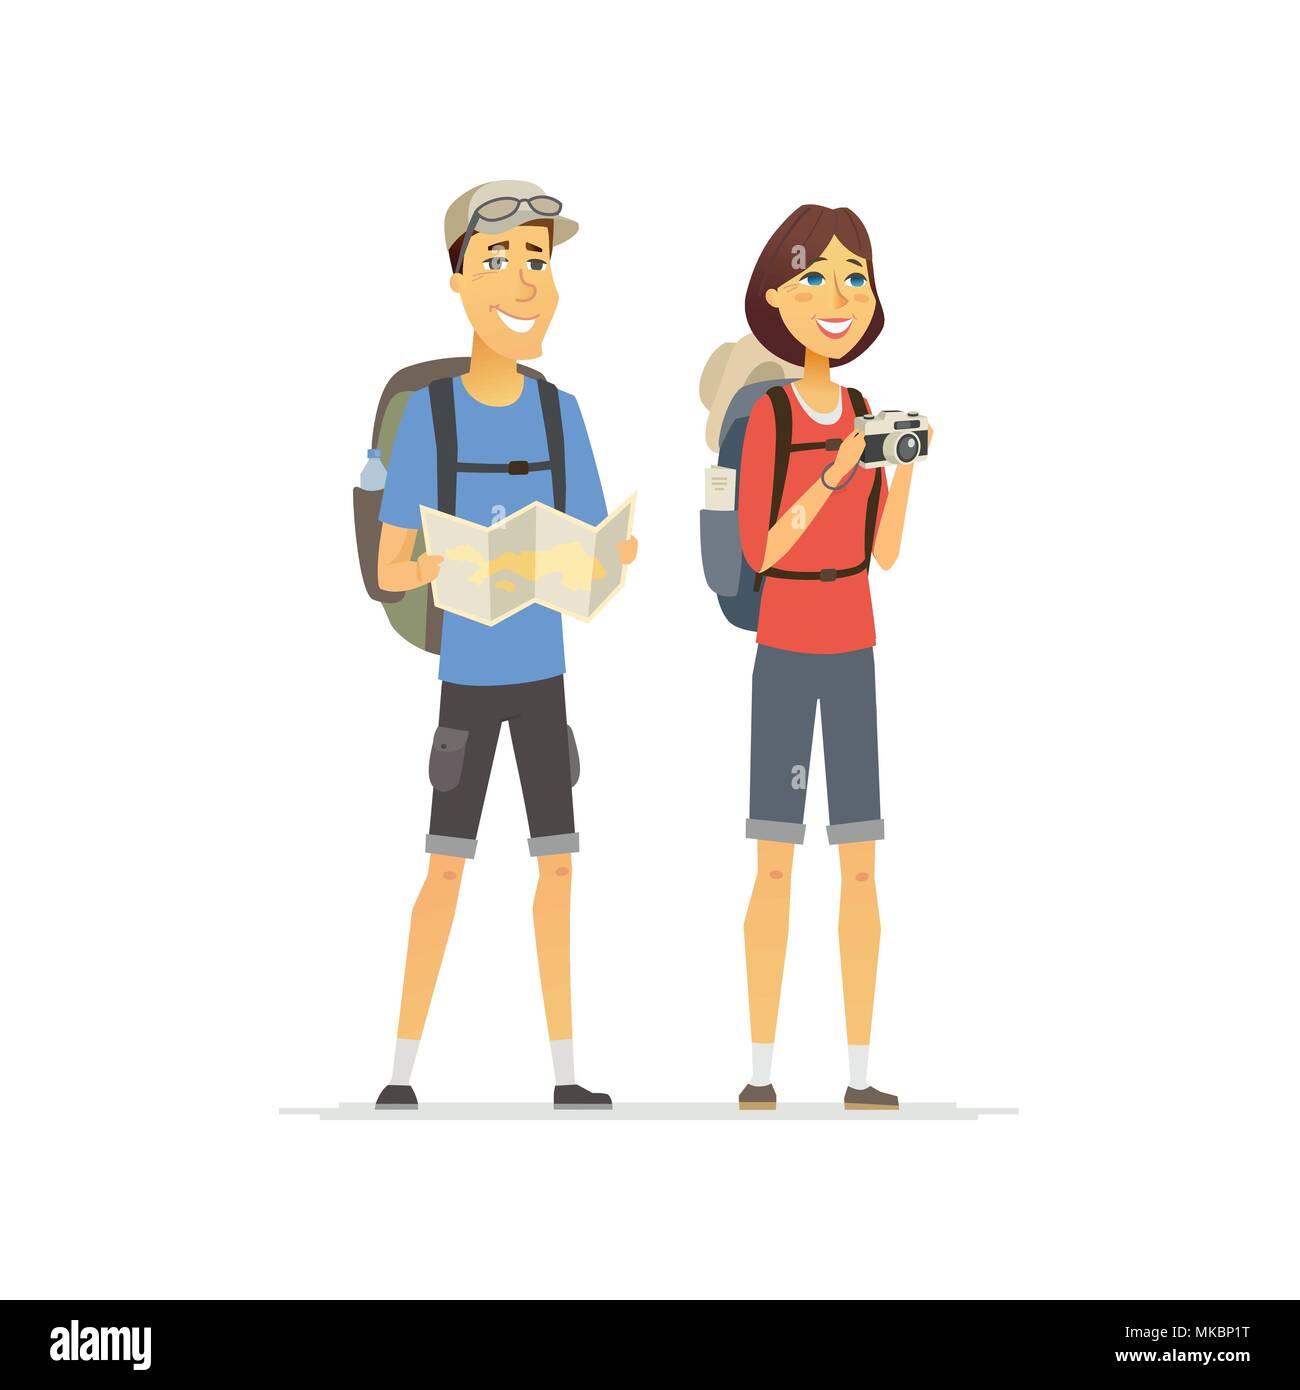 Junges Paar auf Urlaub - cartoon Menschen Charakter isoliert Abbildung Stock Vektor